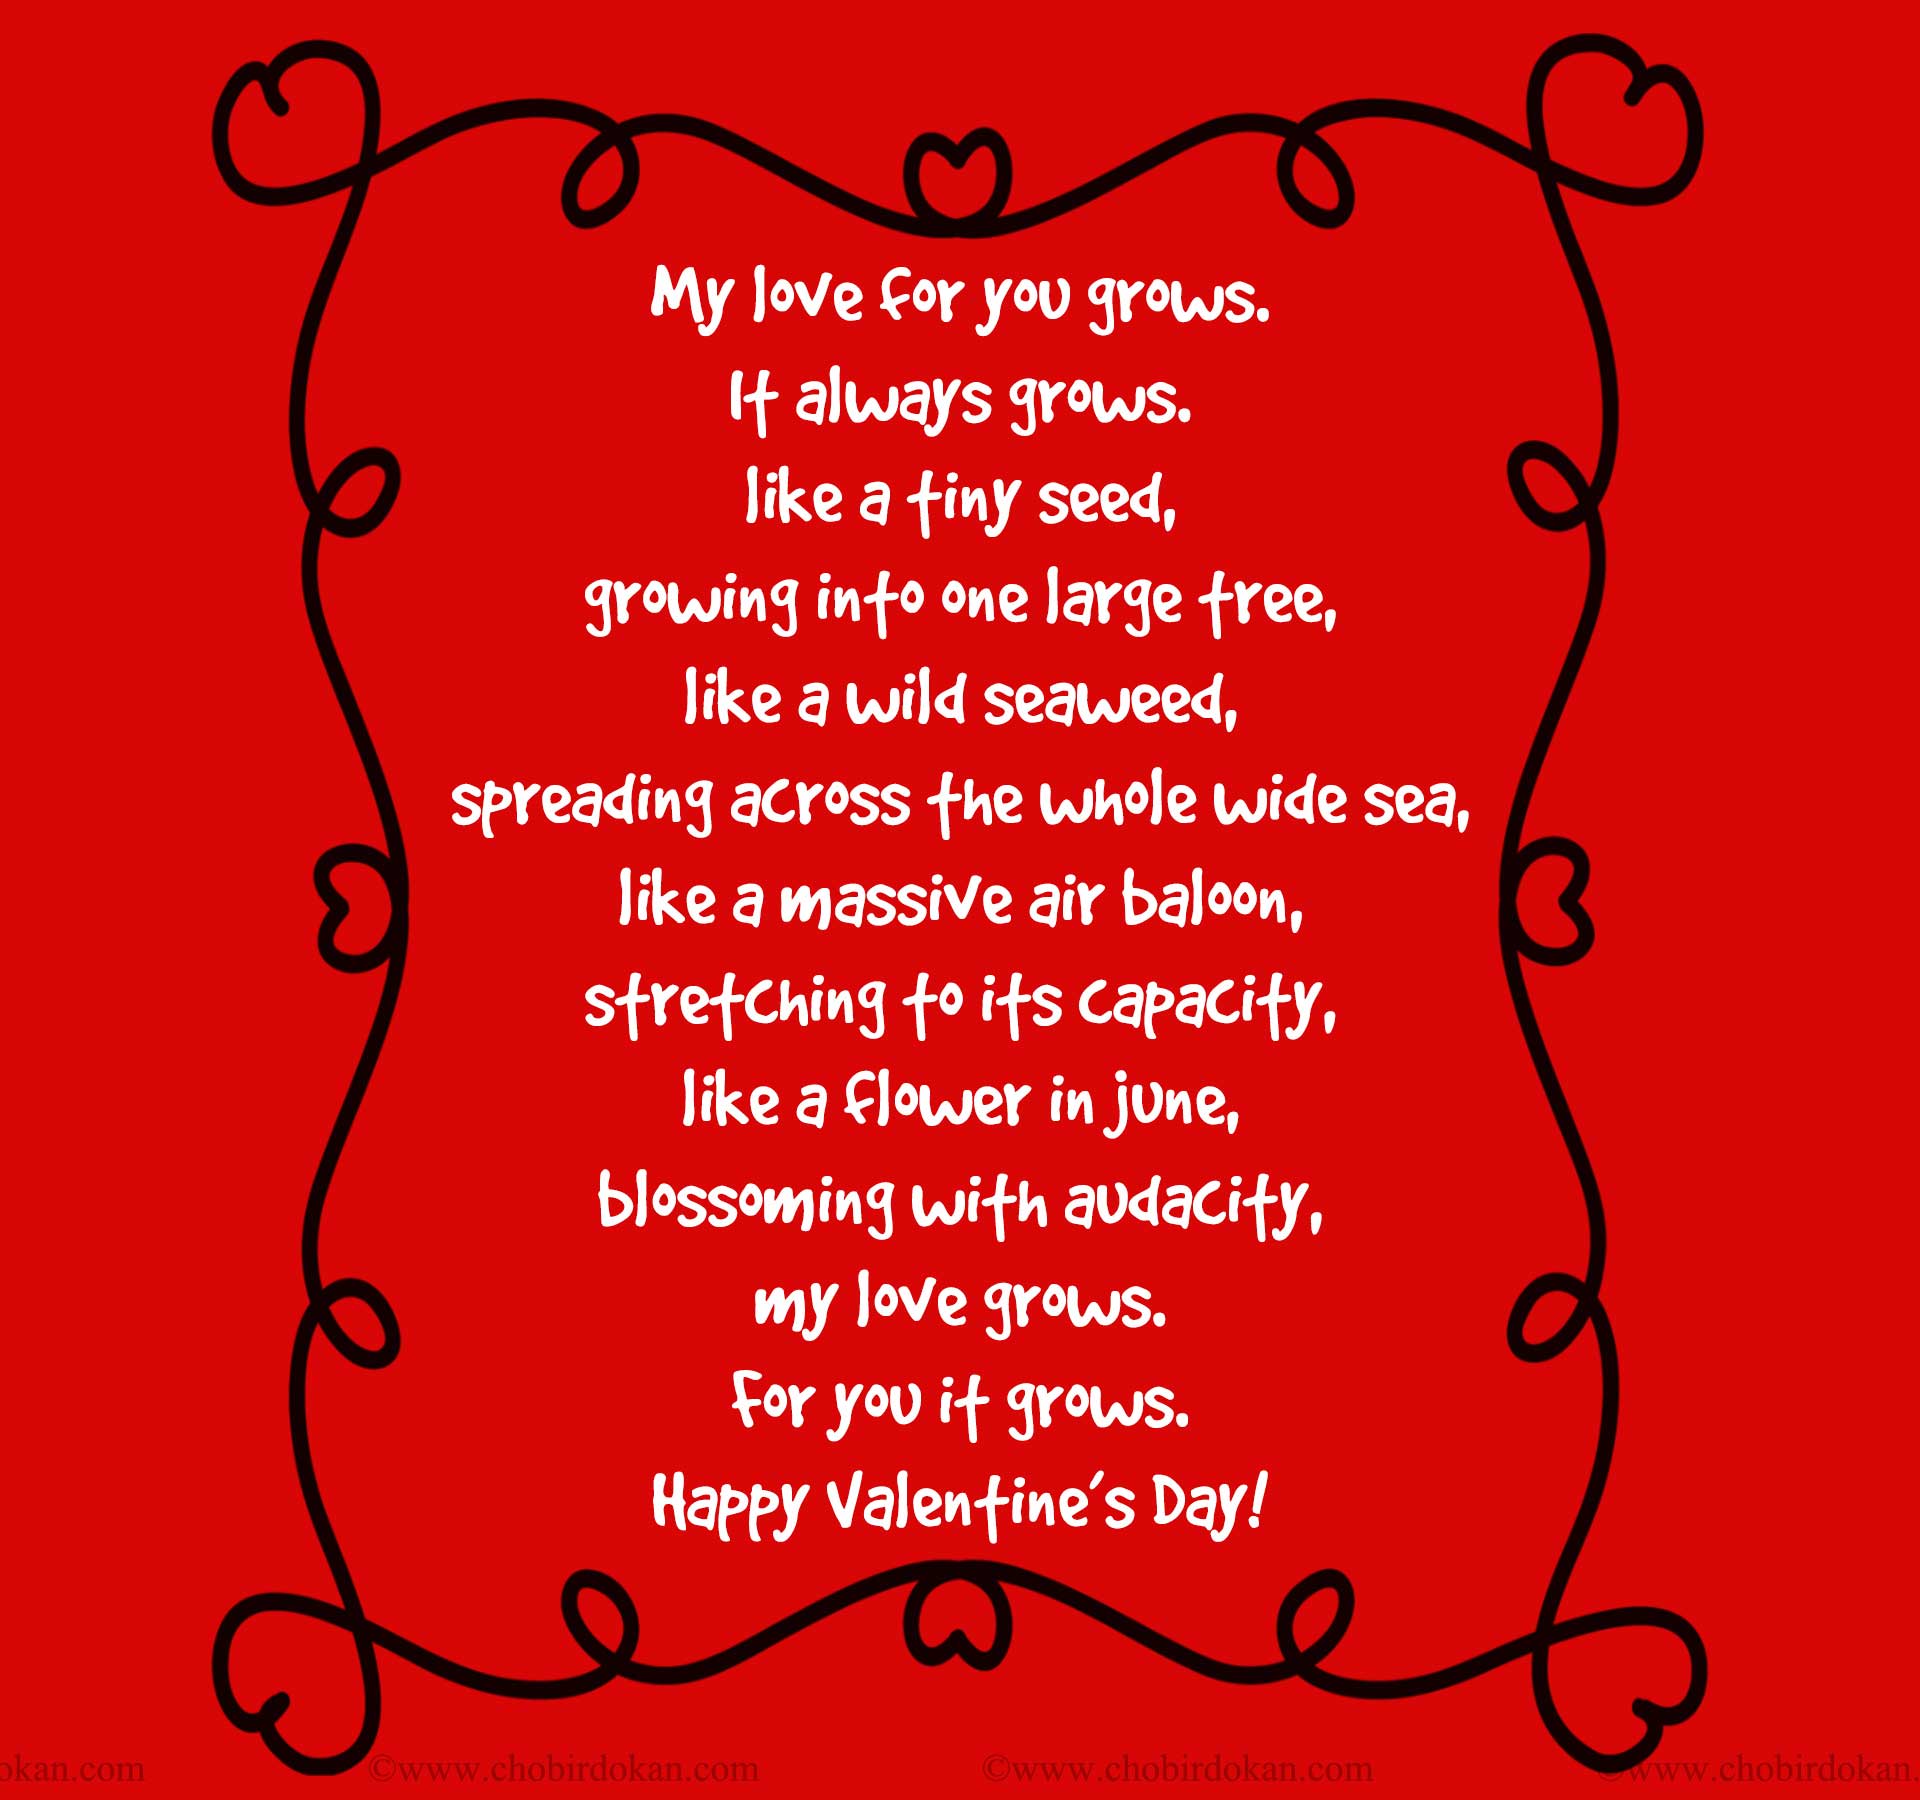 Valentines Poems For Him; For Your Boyfriend or Husband|Poems|Chobirdokan